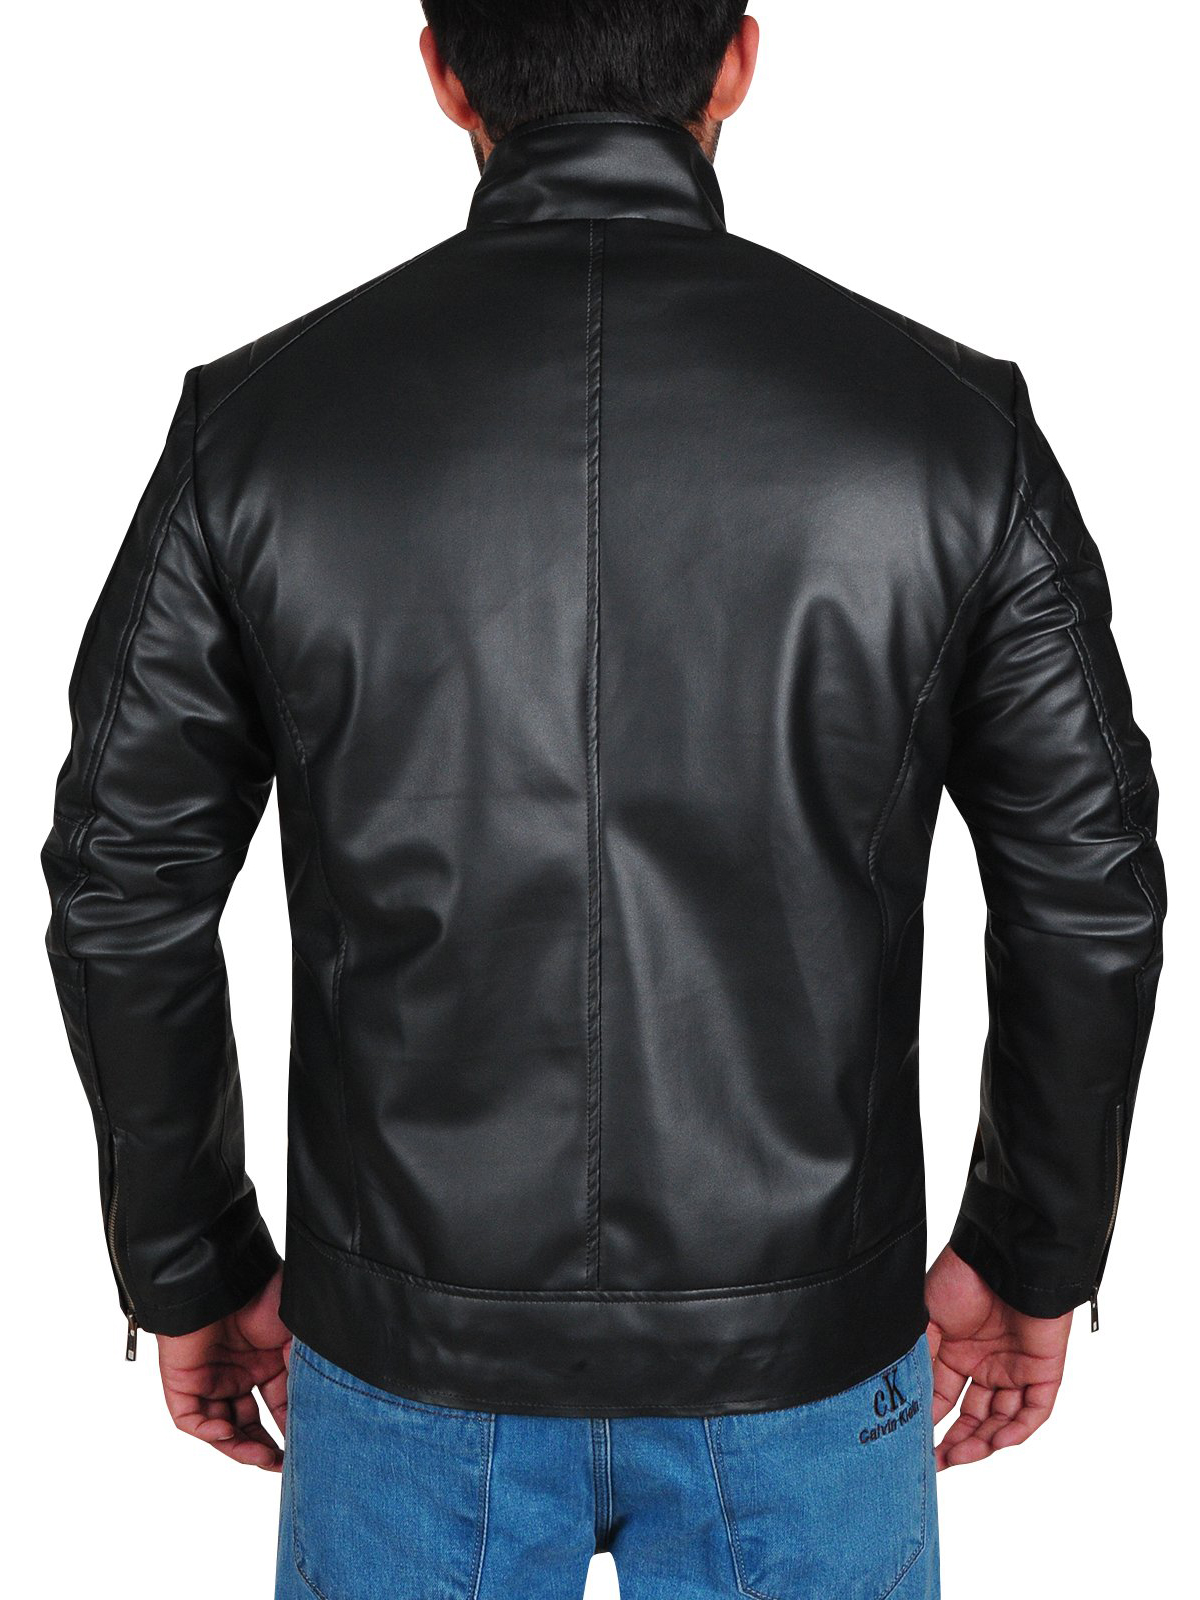 Jonathan David Good Striped Design Leather Jacket – Bay Perfect